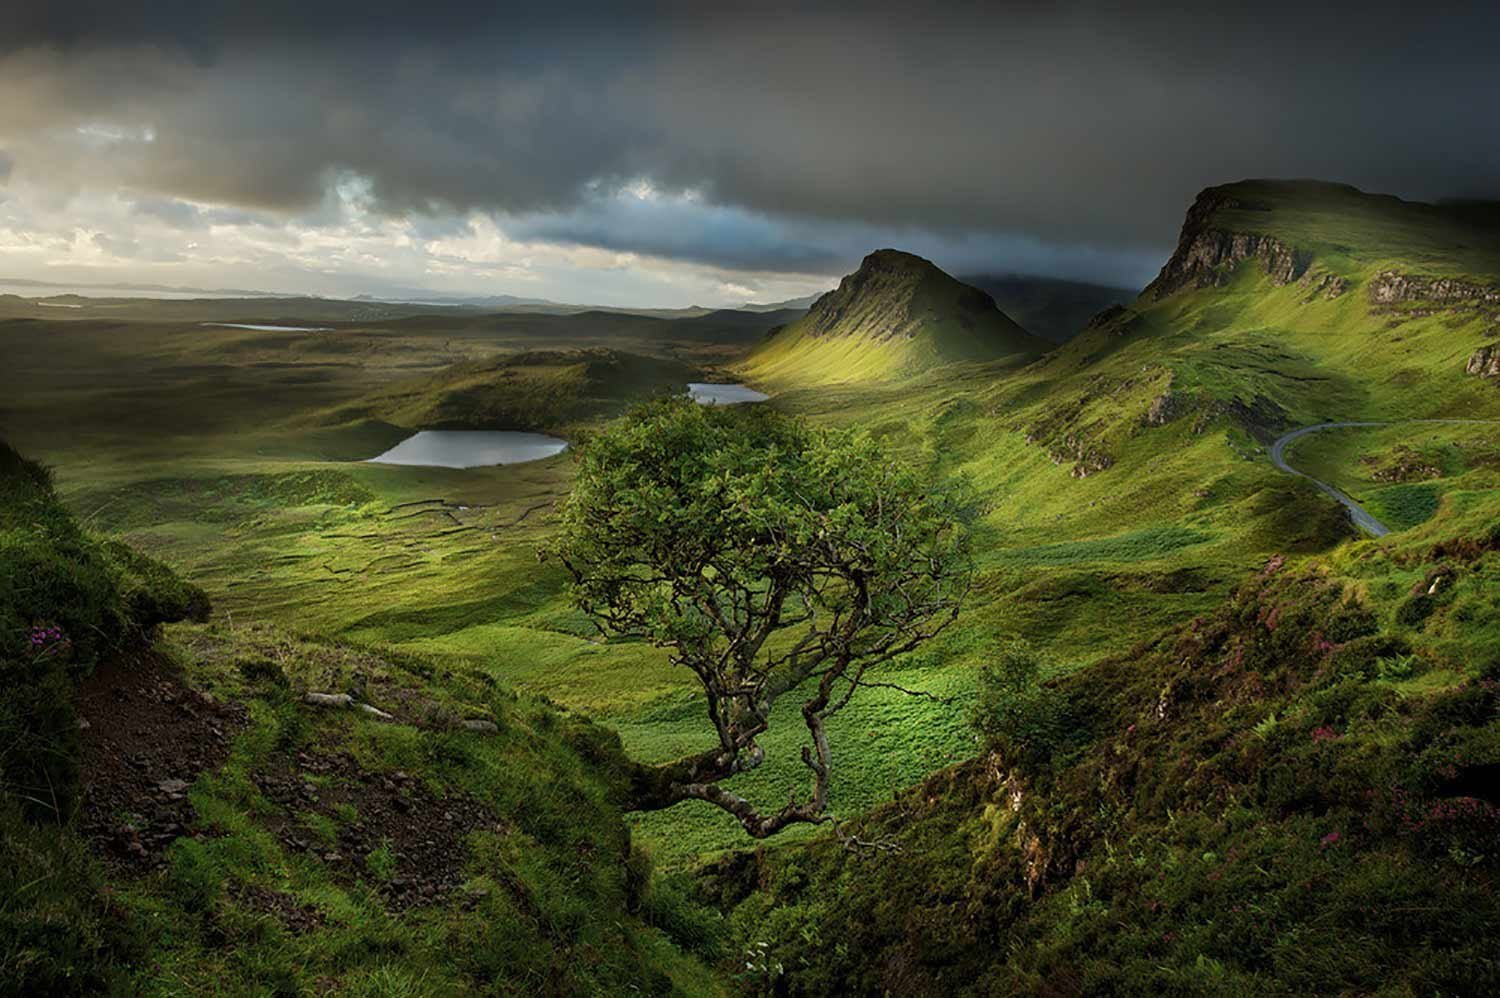 Scotland is beautiful. Quiraing Valley, Skye Island, Шотландия. Природа Ирландии Шотландии. Гэлы Шотландия. Северная Шотландия.